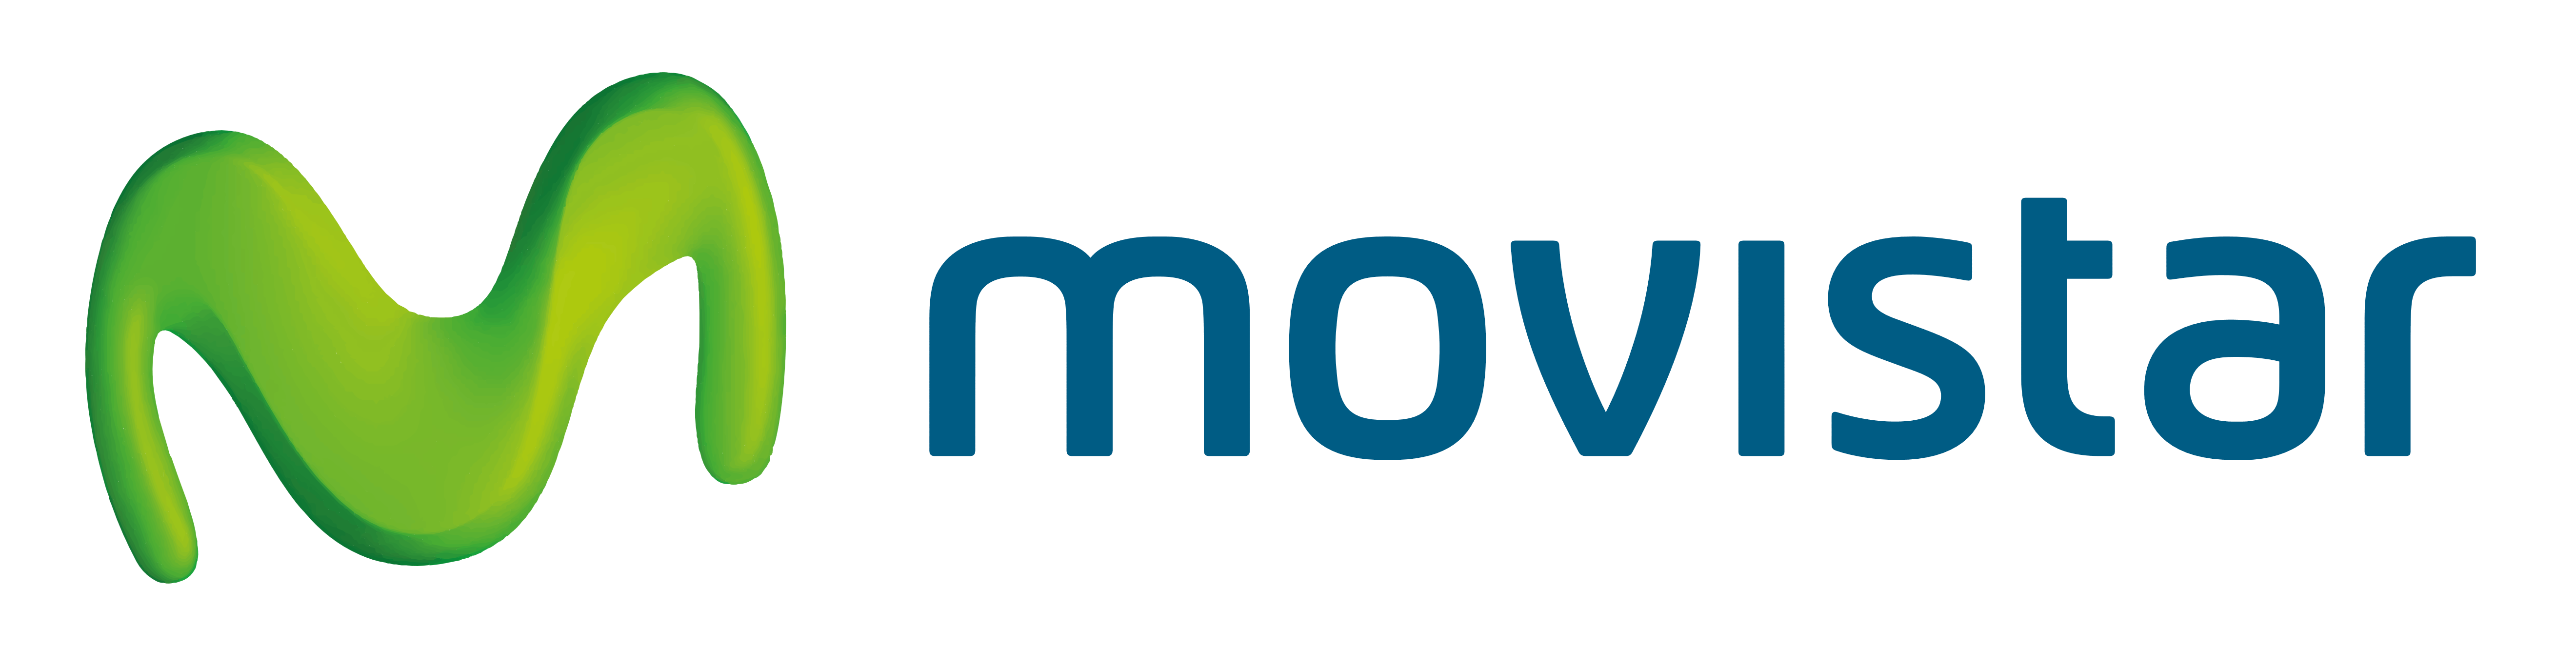 Movistar Logos